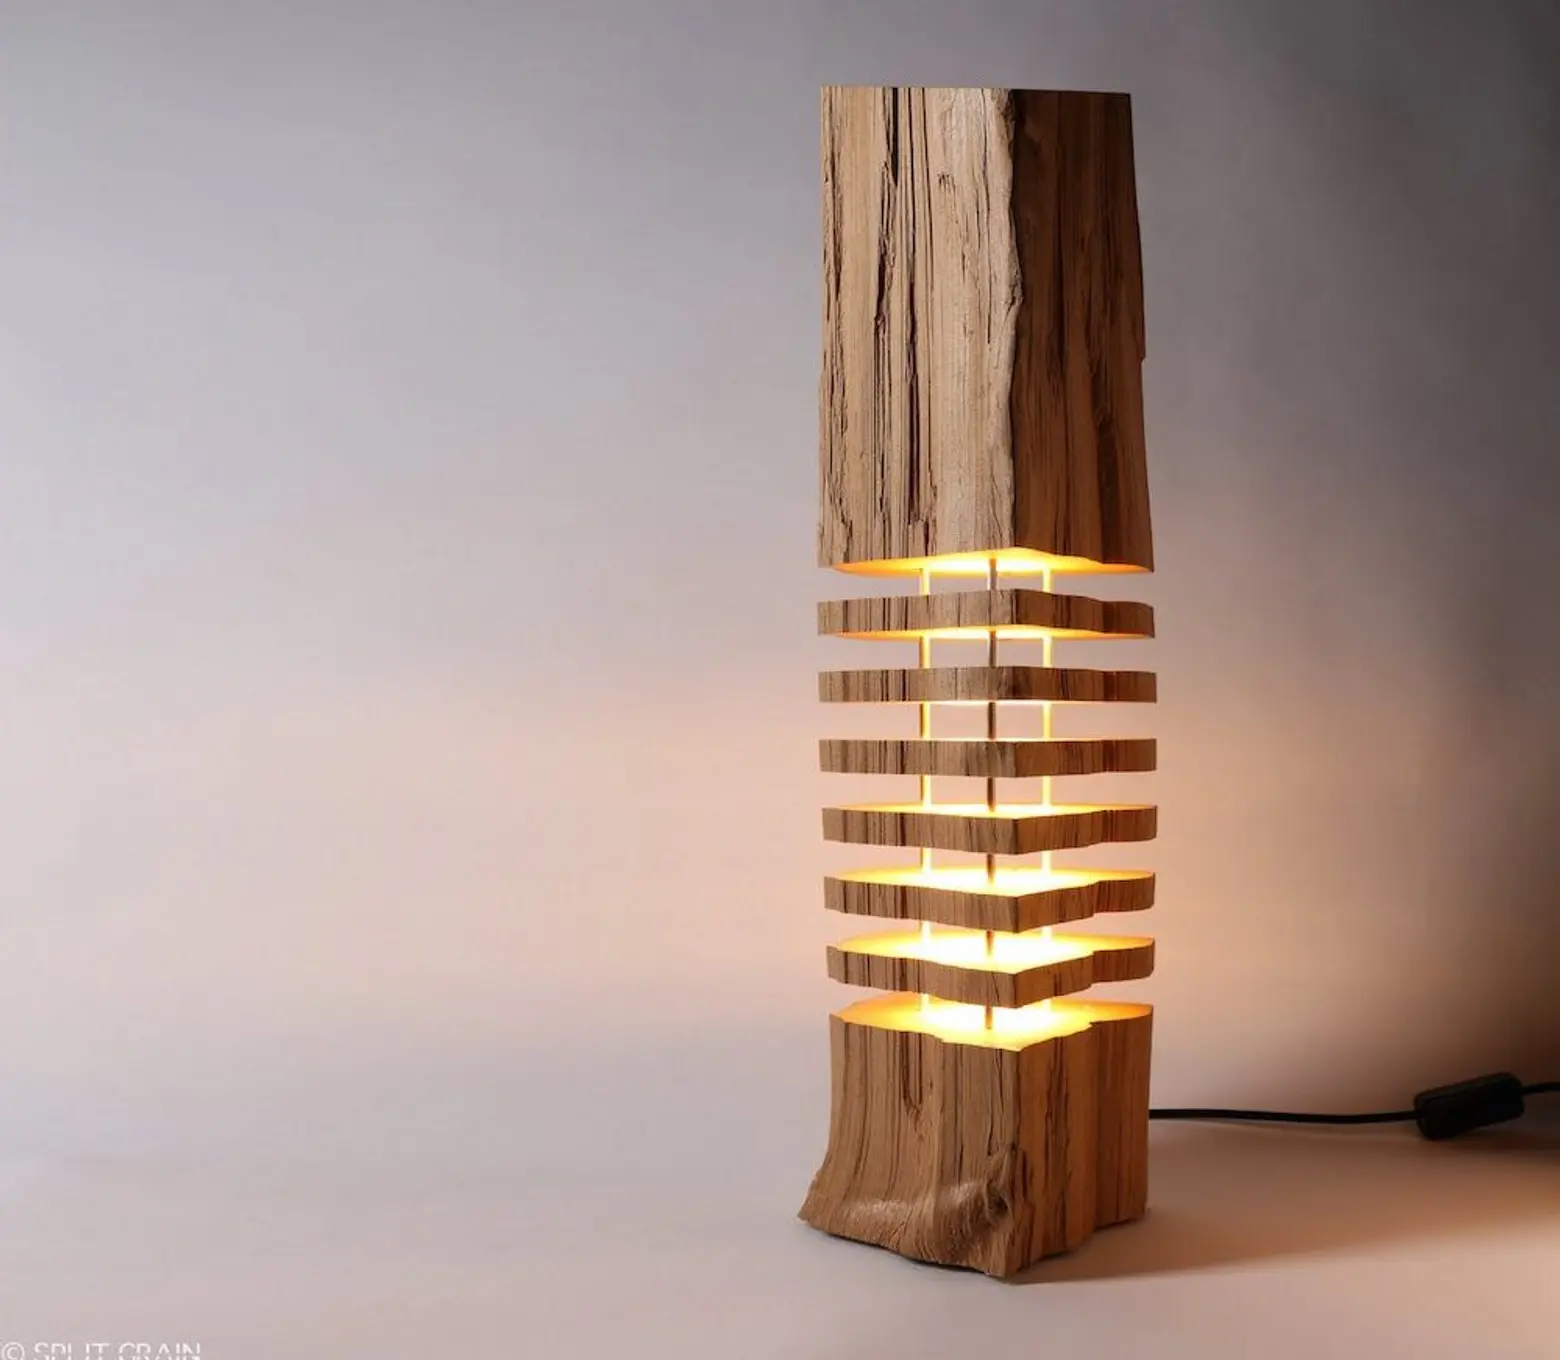 Paul Foeckler creates rustic indoor lighting using reclaimed California firewood